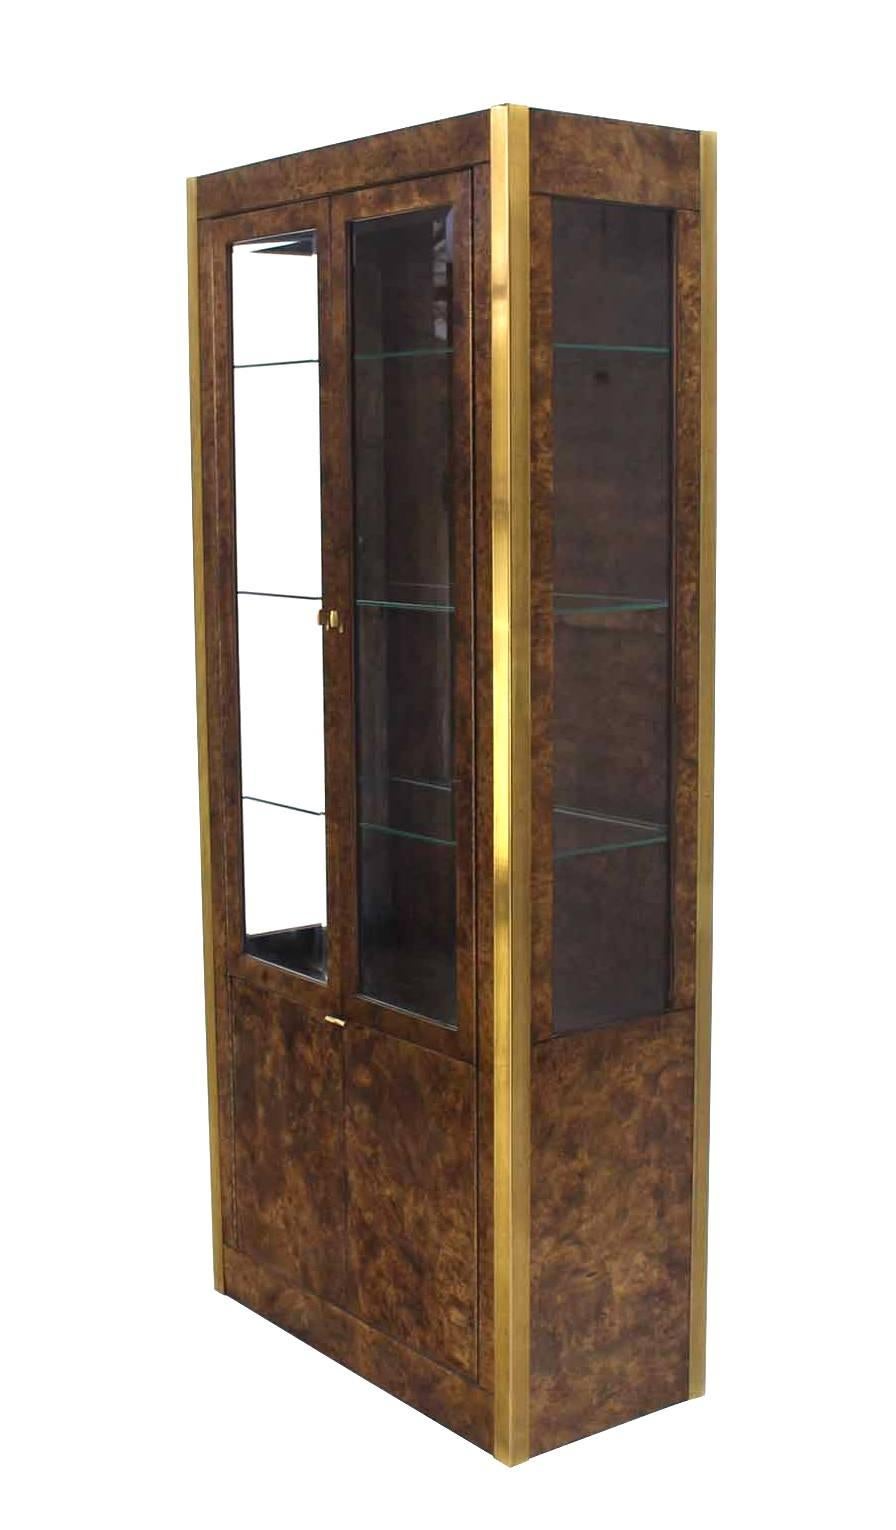 Very nice Mid-Century Modern tall vitrine lighted interior cabinets showcases.